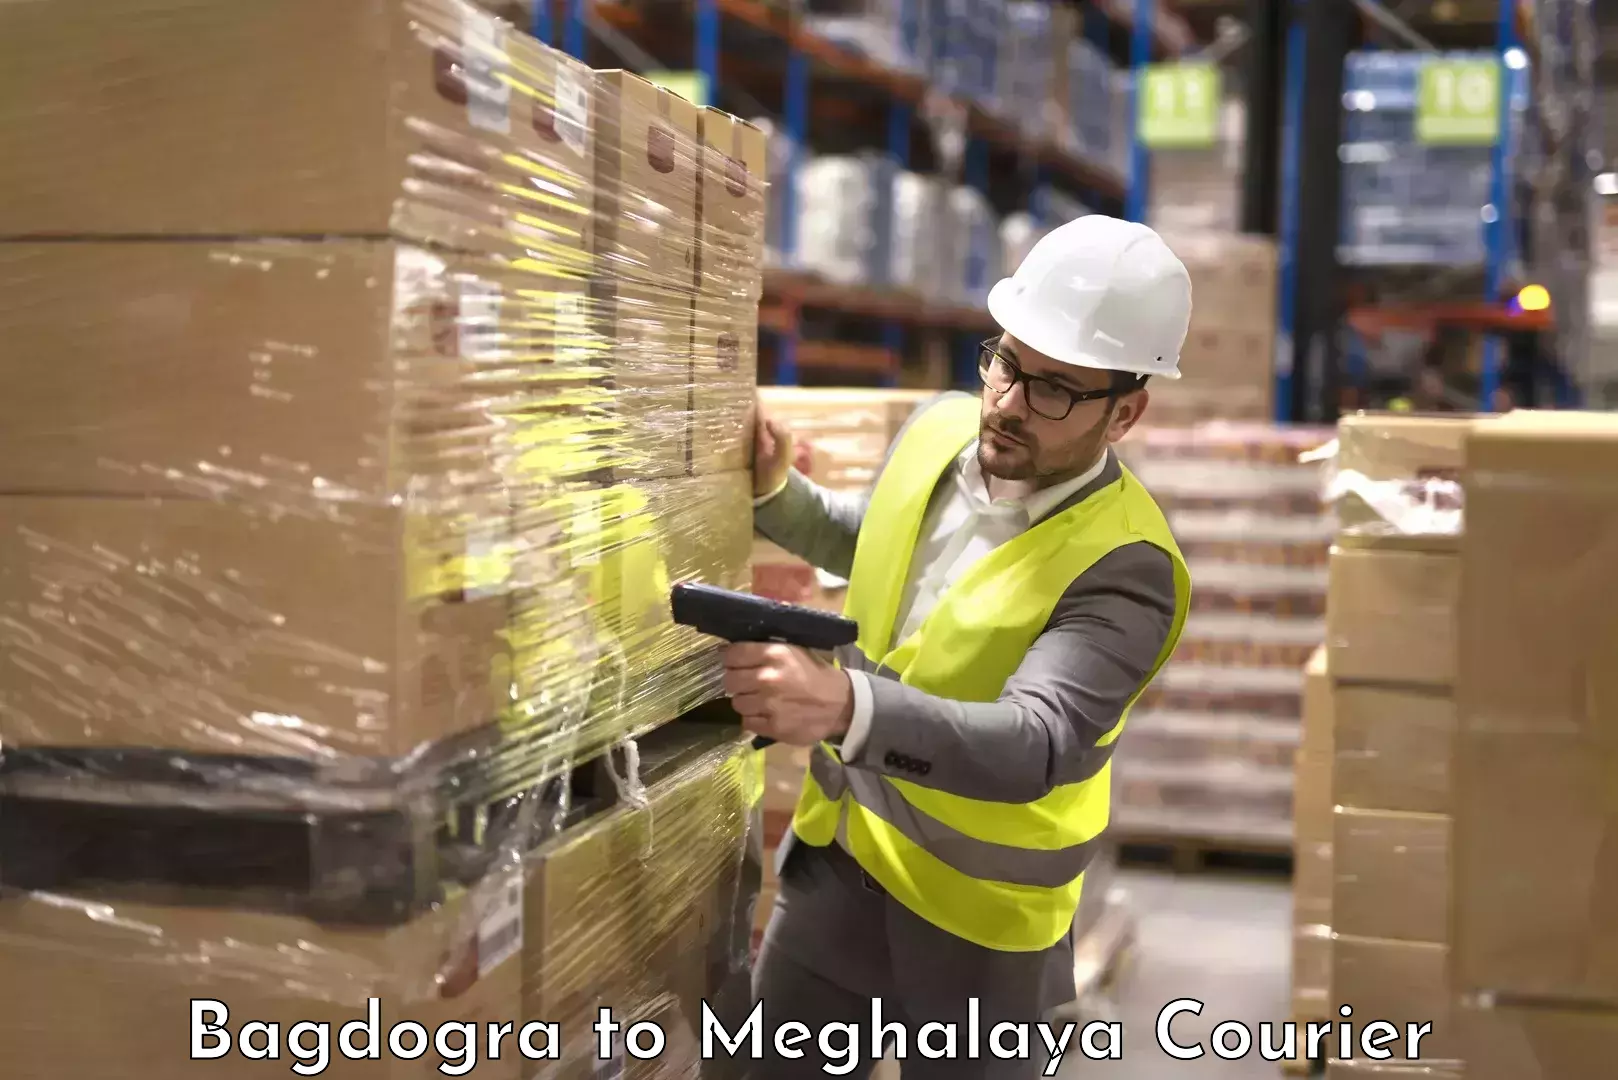 Baggage delivery technology Bagdogra to Meghalaya